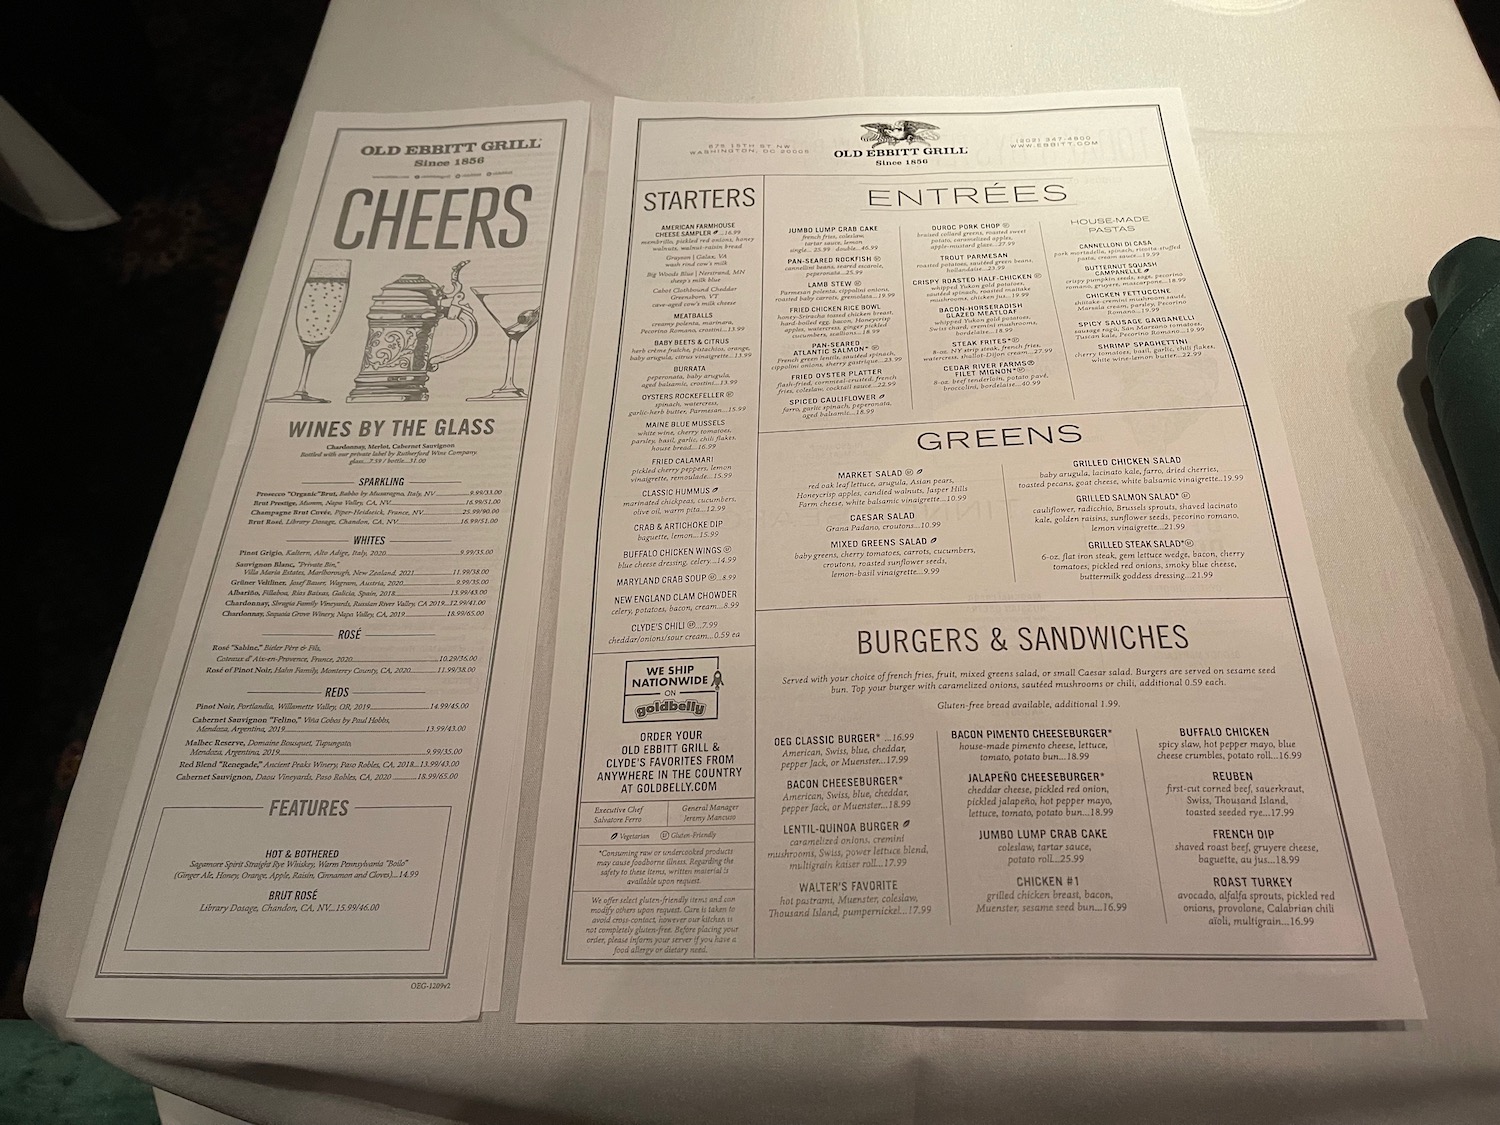 a menu on a table